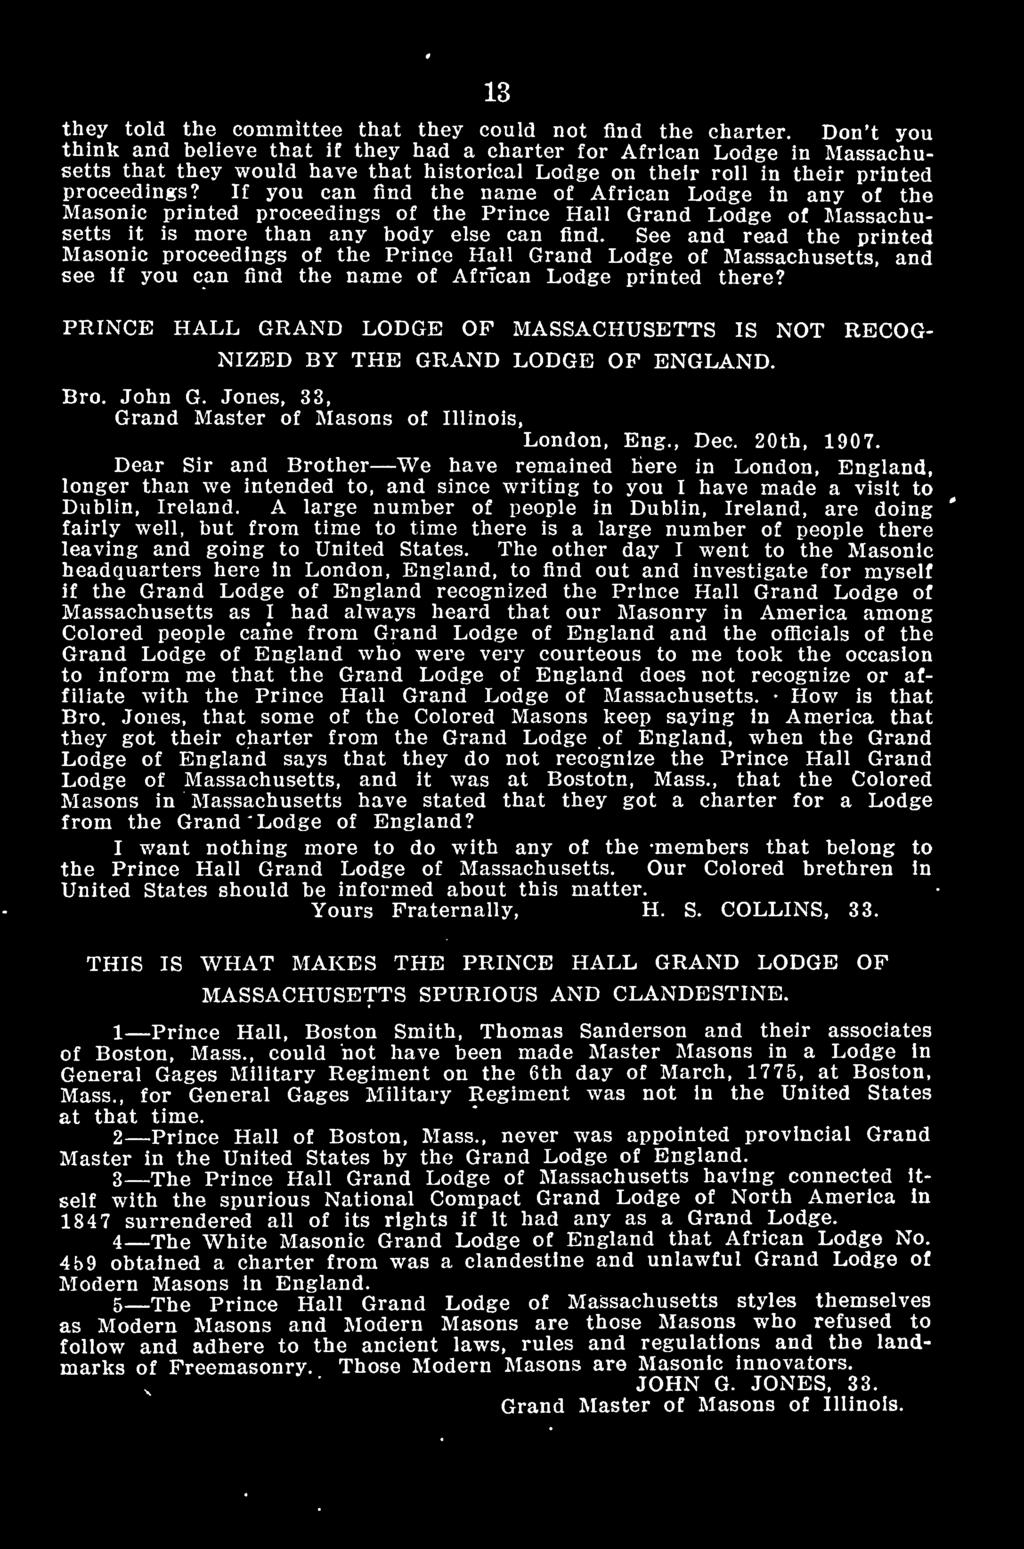 PRINCE HALL GRAND LODGE OP MASSACHUSETTS IS NOT RECOG- NIZED BY THE GRAND LODGE OF ENGLAND. Bro. John G. Jones, 33, Grand Master of Masons of Illinois, London, Eng., Dec. 20th, 1907.